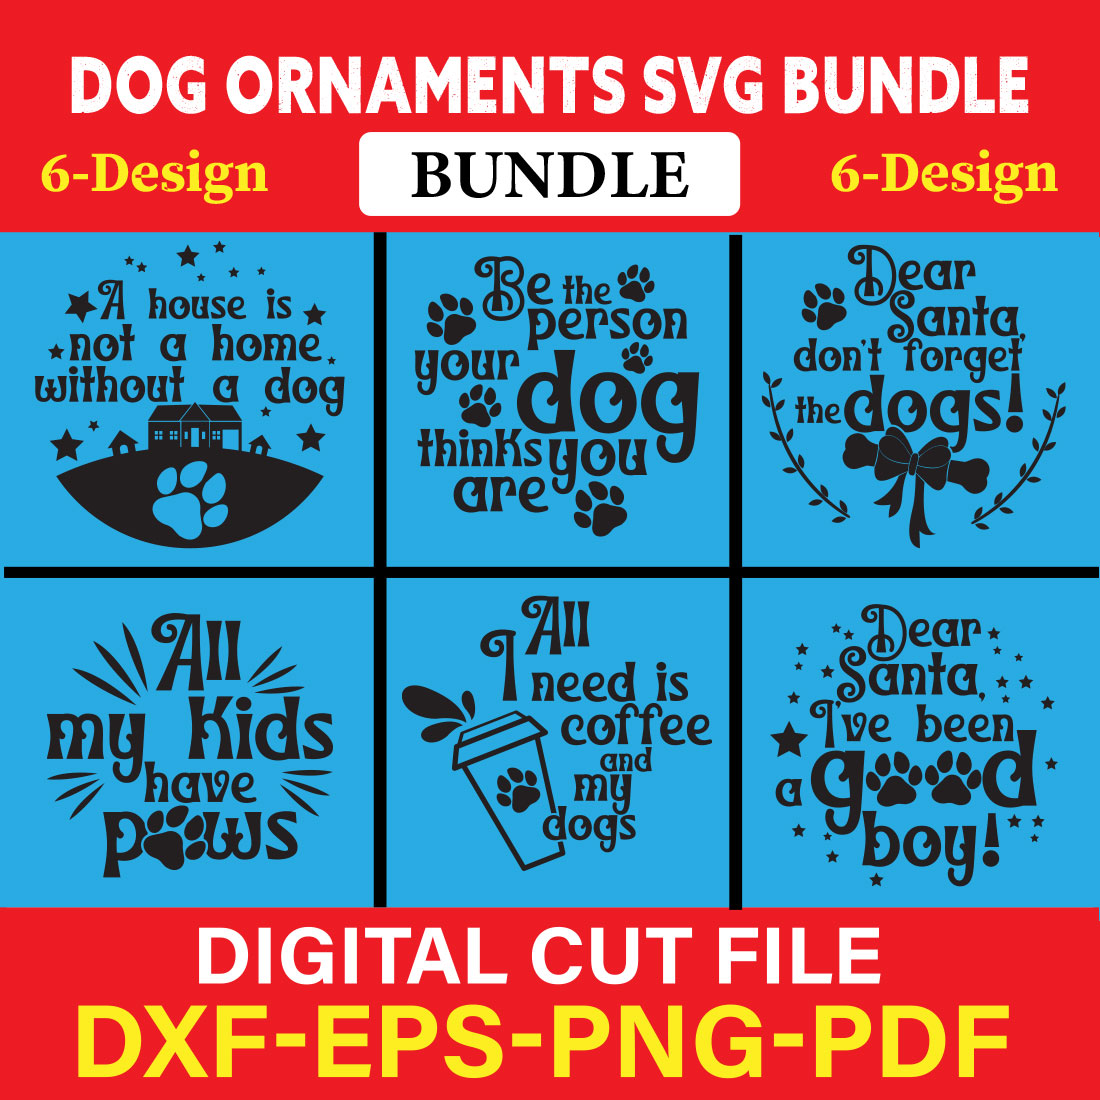 Dog Ornaments T-shirt Design Bundle Vol-1 cover image.